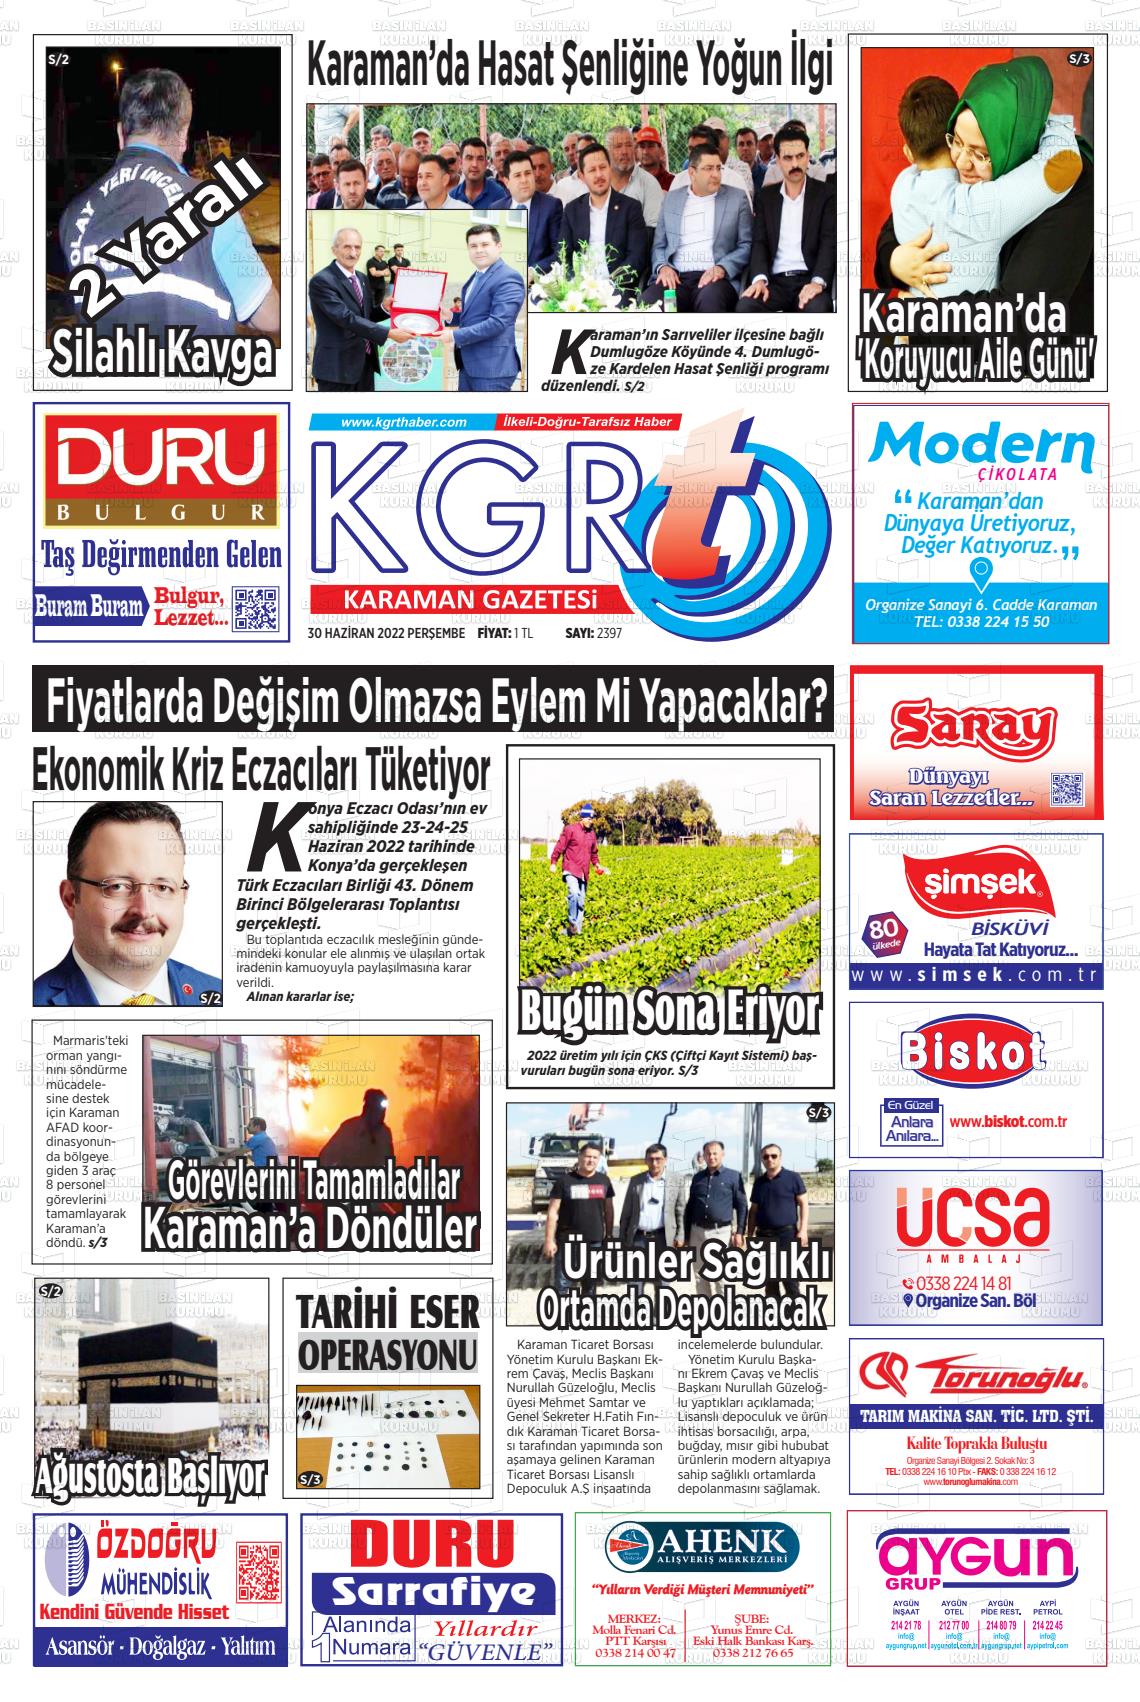 30 Haziran 2022 Kgrt Karaman Gazete Manşeti